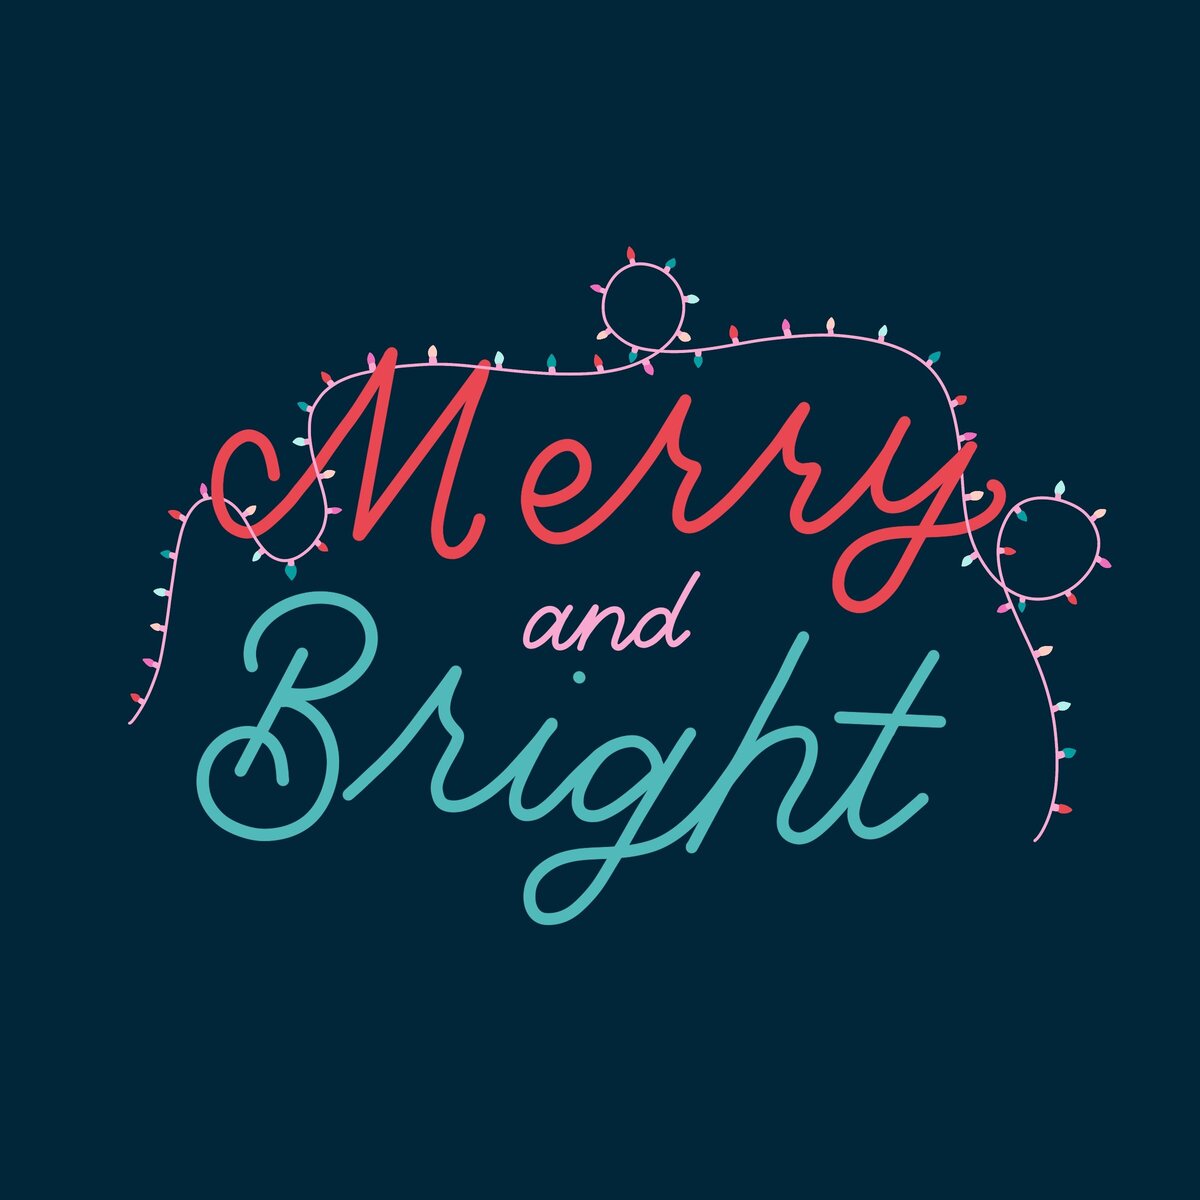 Merry-bright